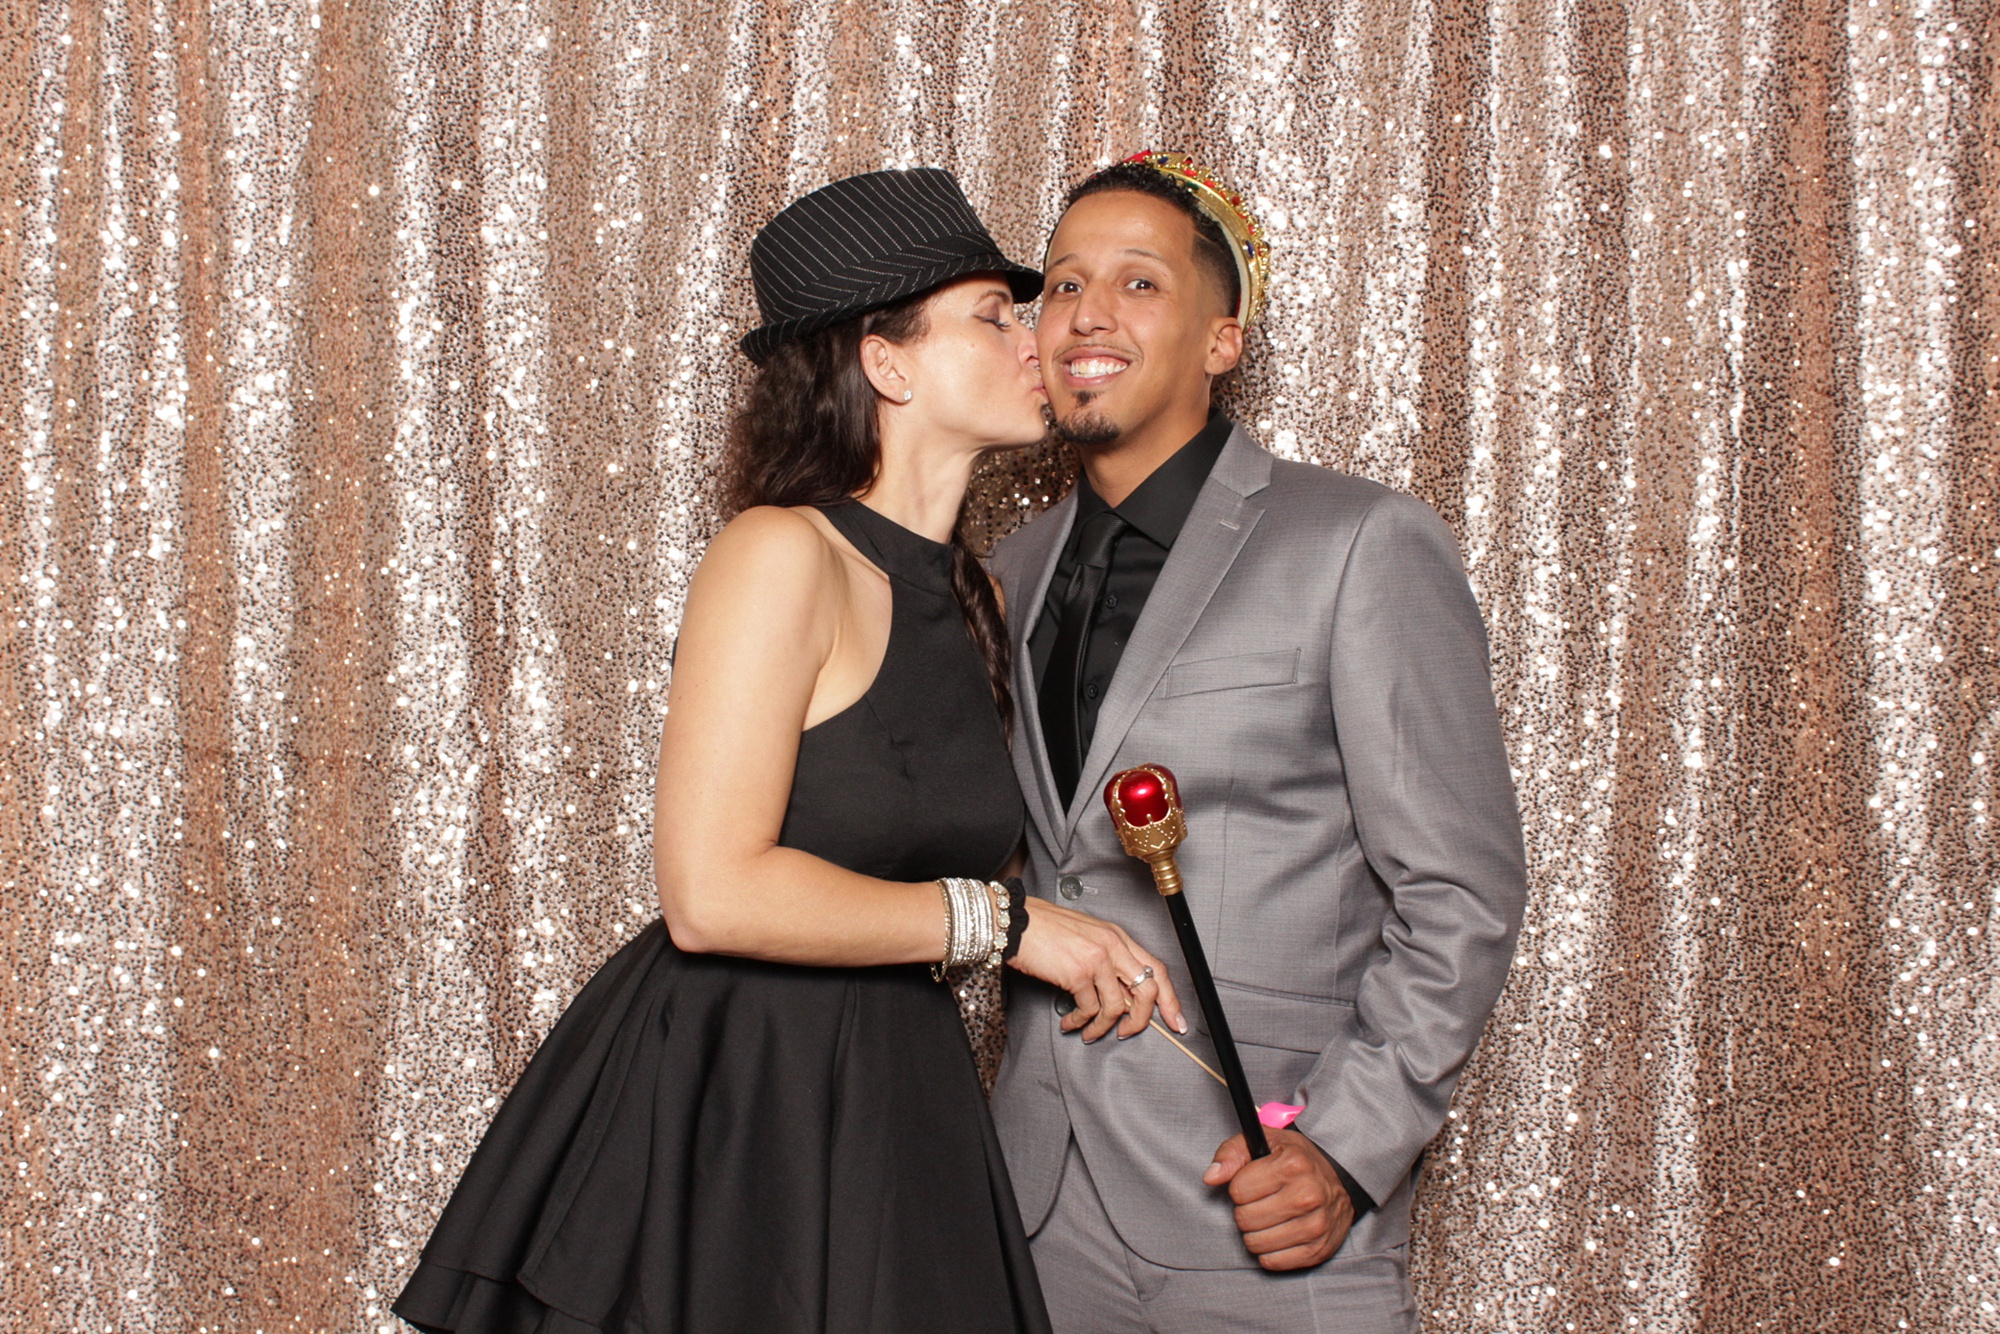 girlfriend kisses boyfriend's cheek during NJ photo booth